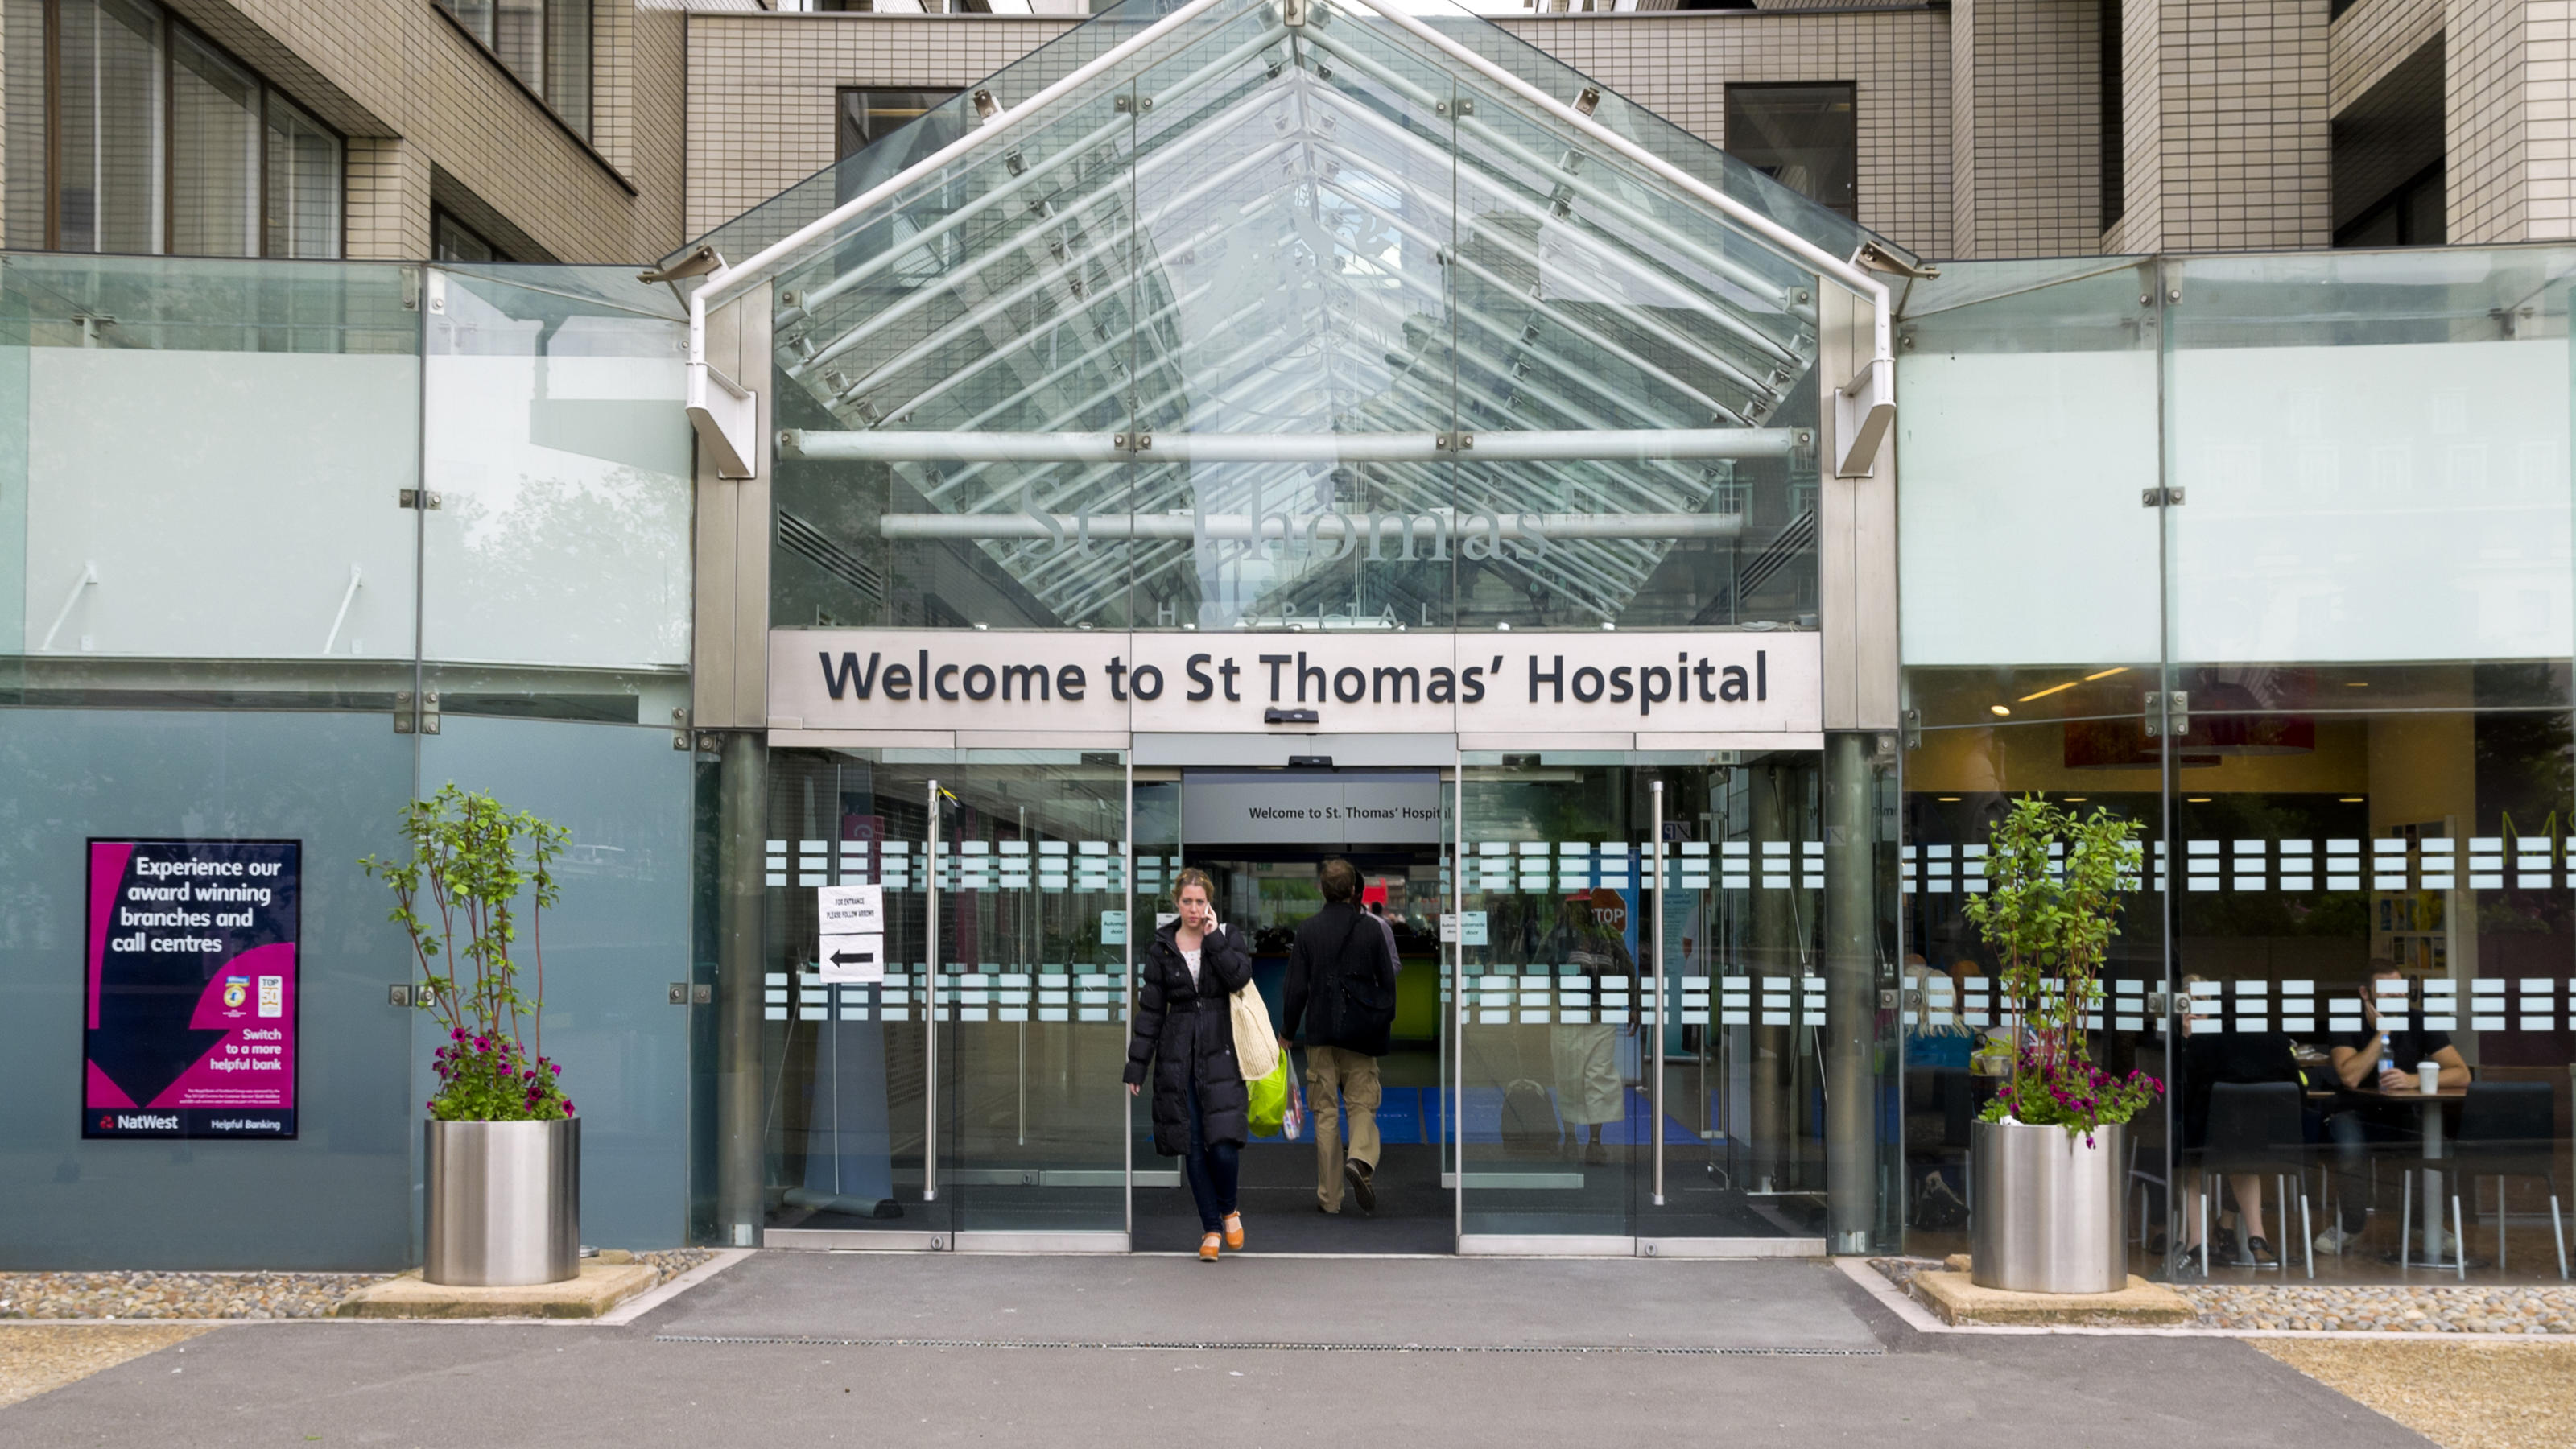 Der Eingang des St. Thomas Hospital in London.